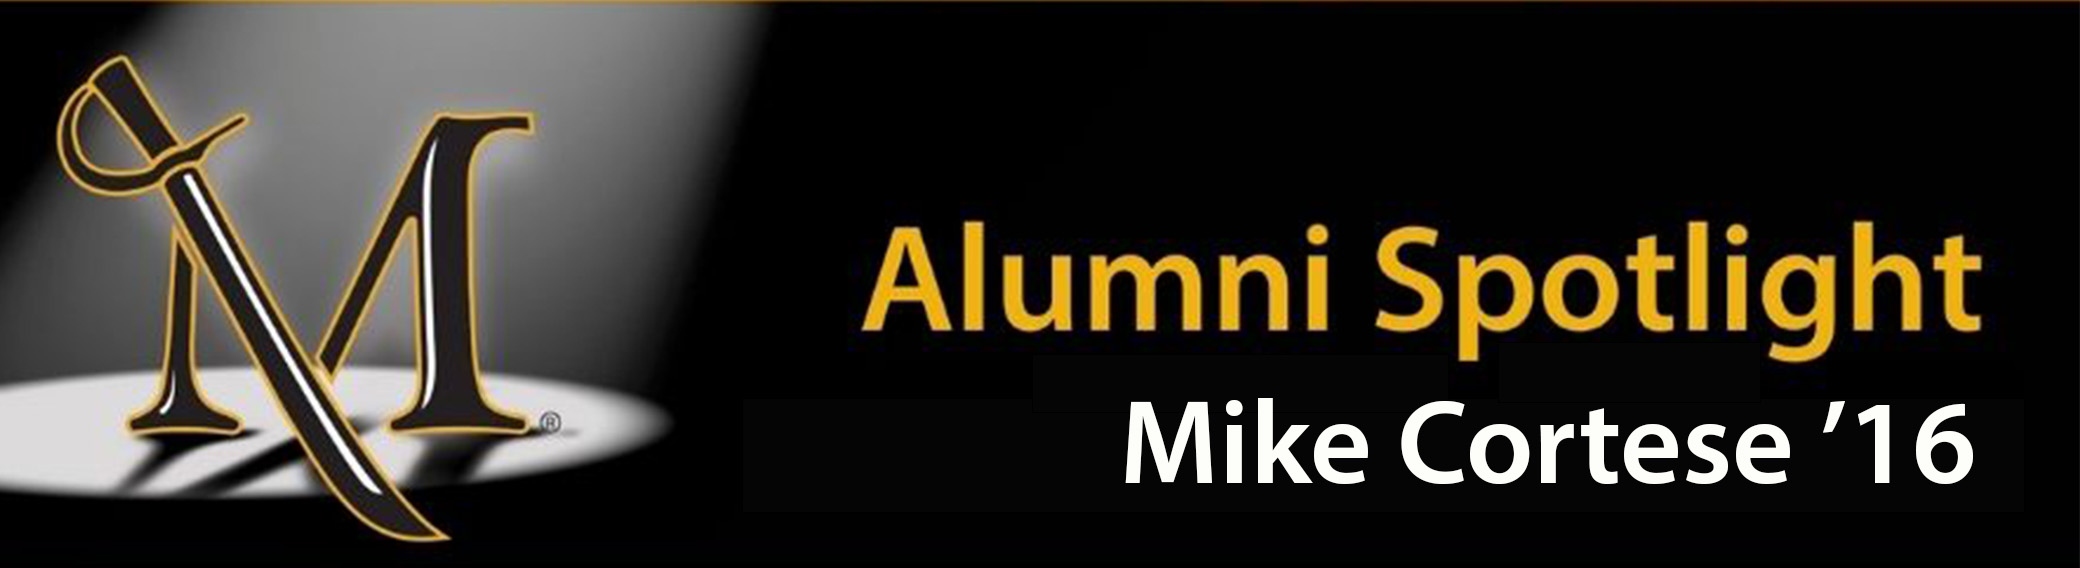 alumni spotlight header Mike Cortese